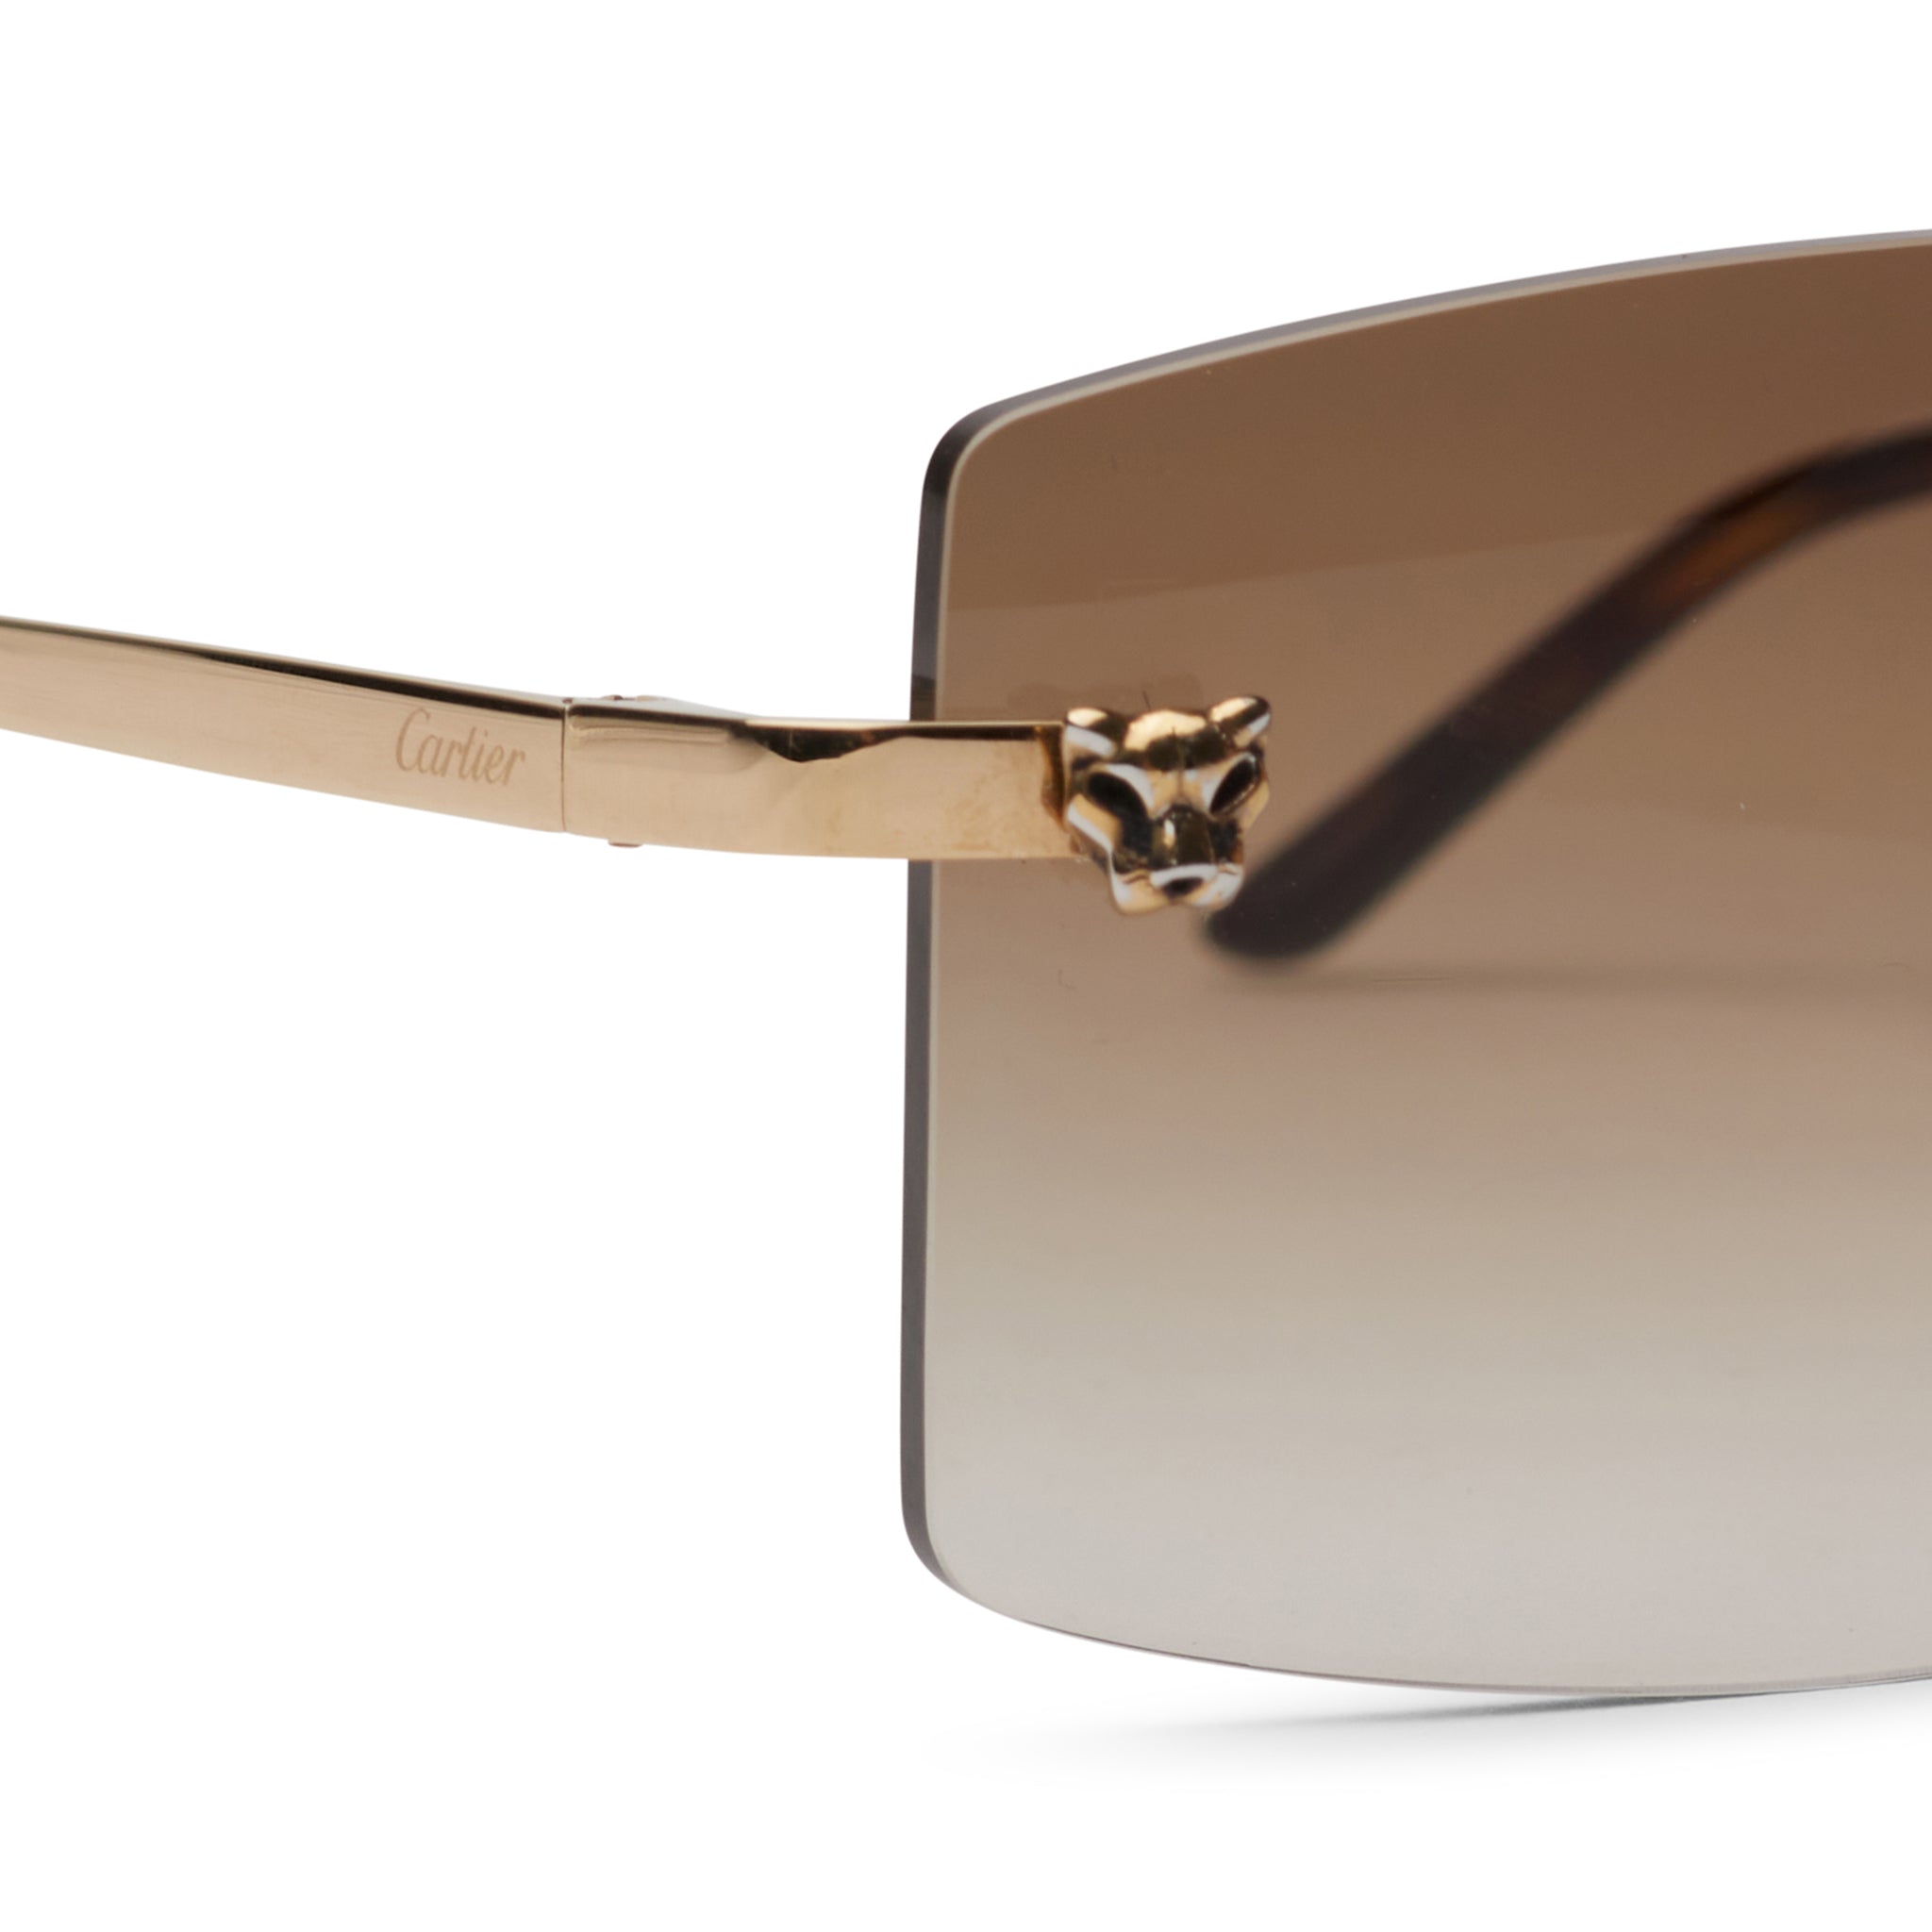 Image of Cartier Eyewear Custom CT01480 Panthere De Cartier Rimless Sunglasses